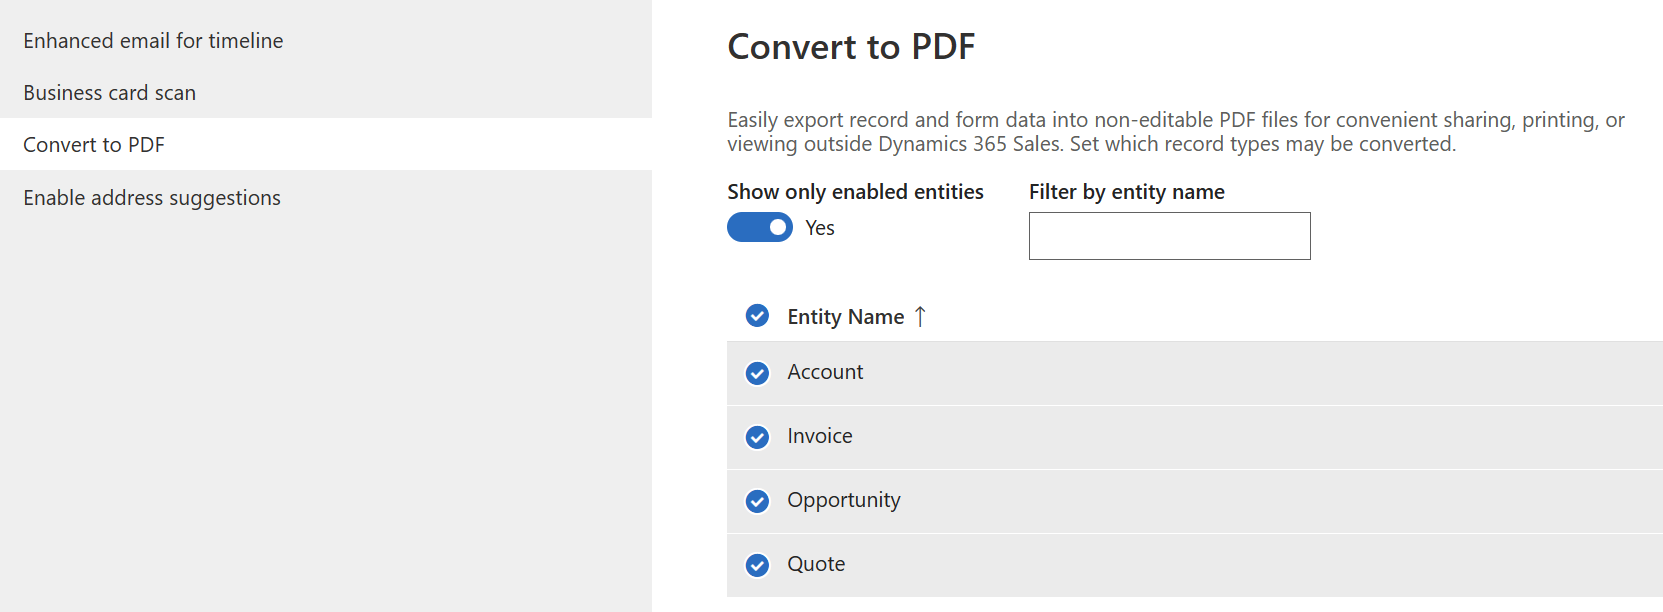 Convert to PDF settings.